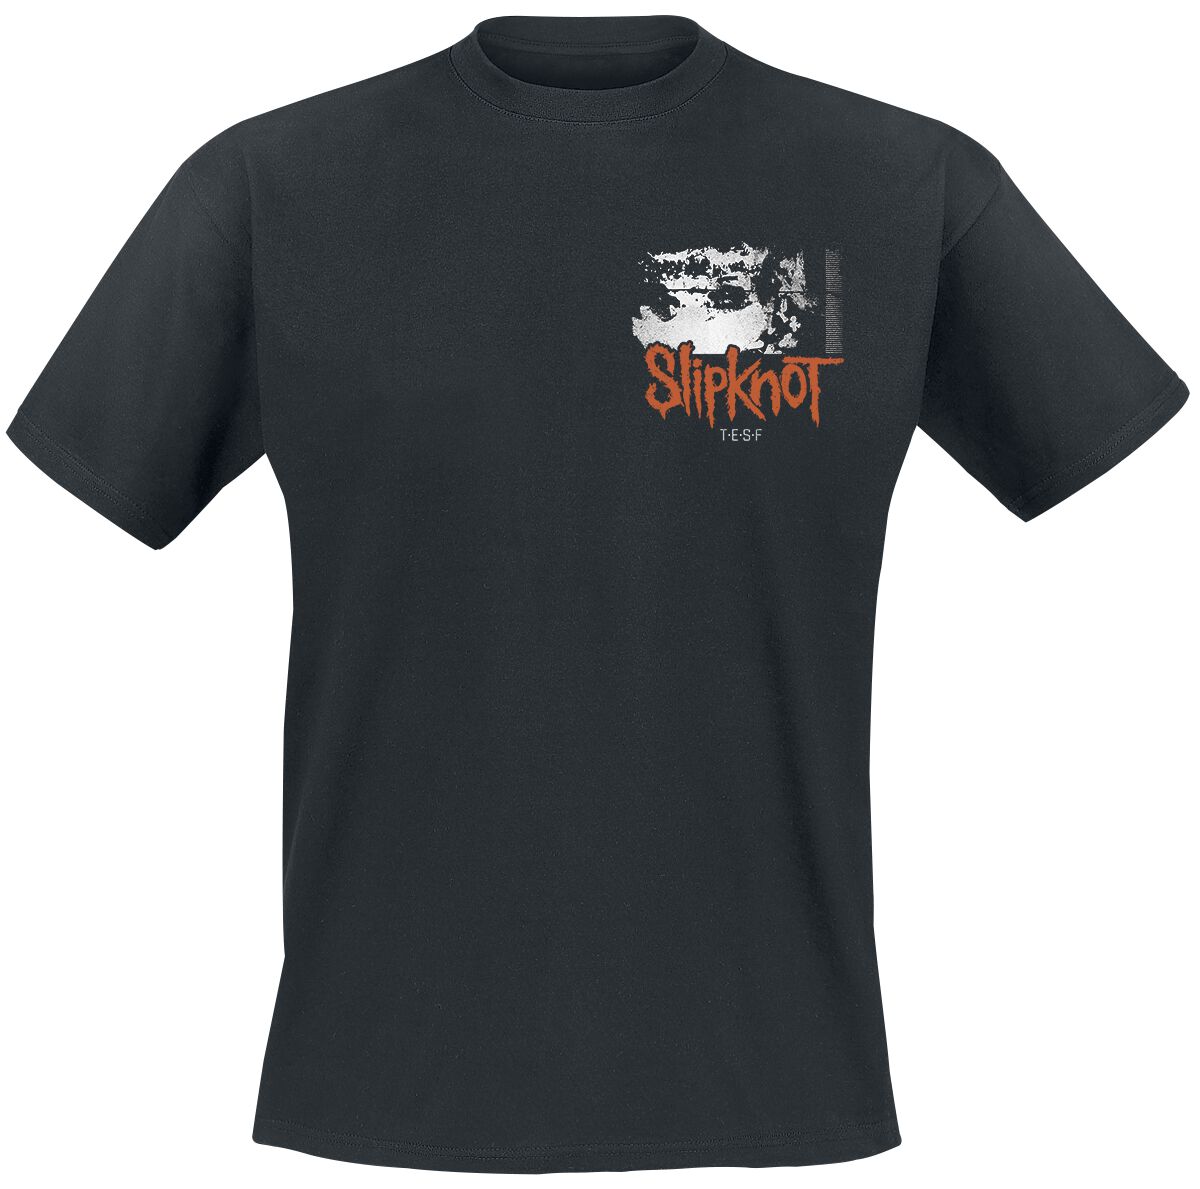 Slipknot The End, So Far Tracklist T-Shirt schwarz in S